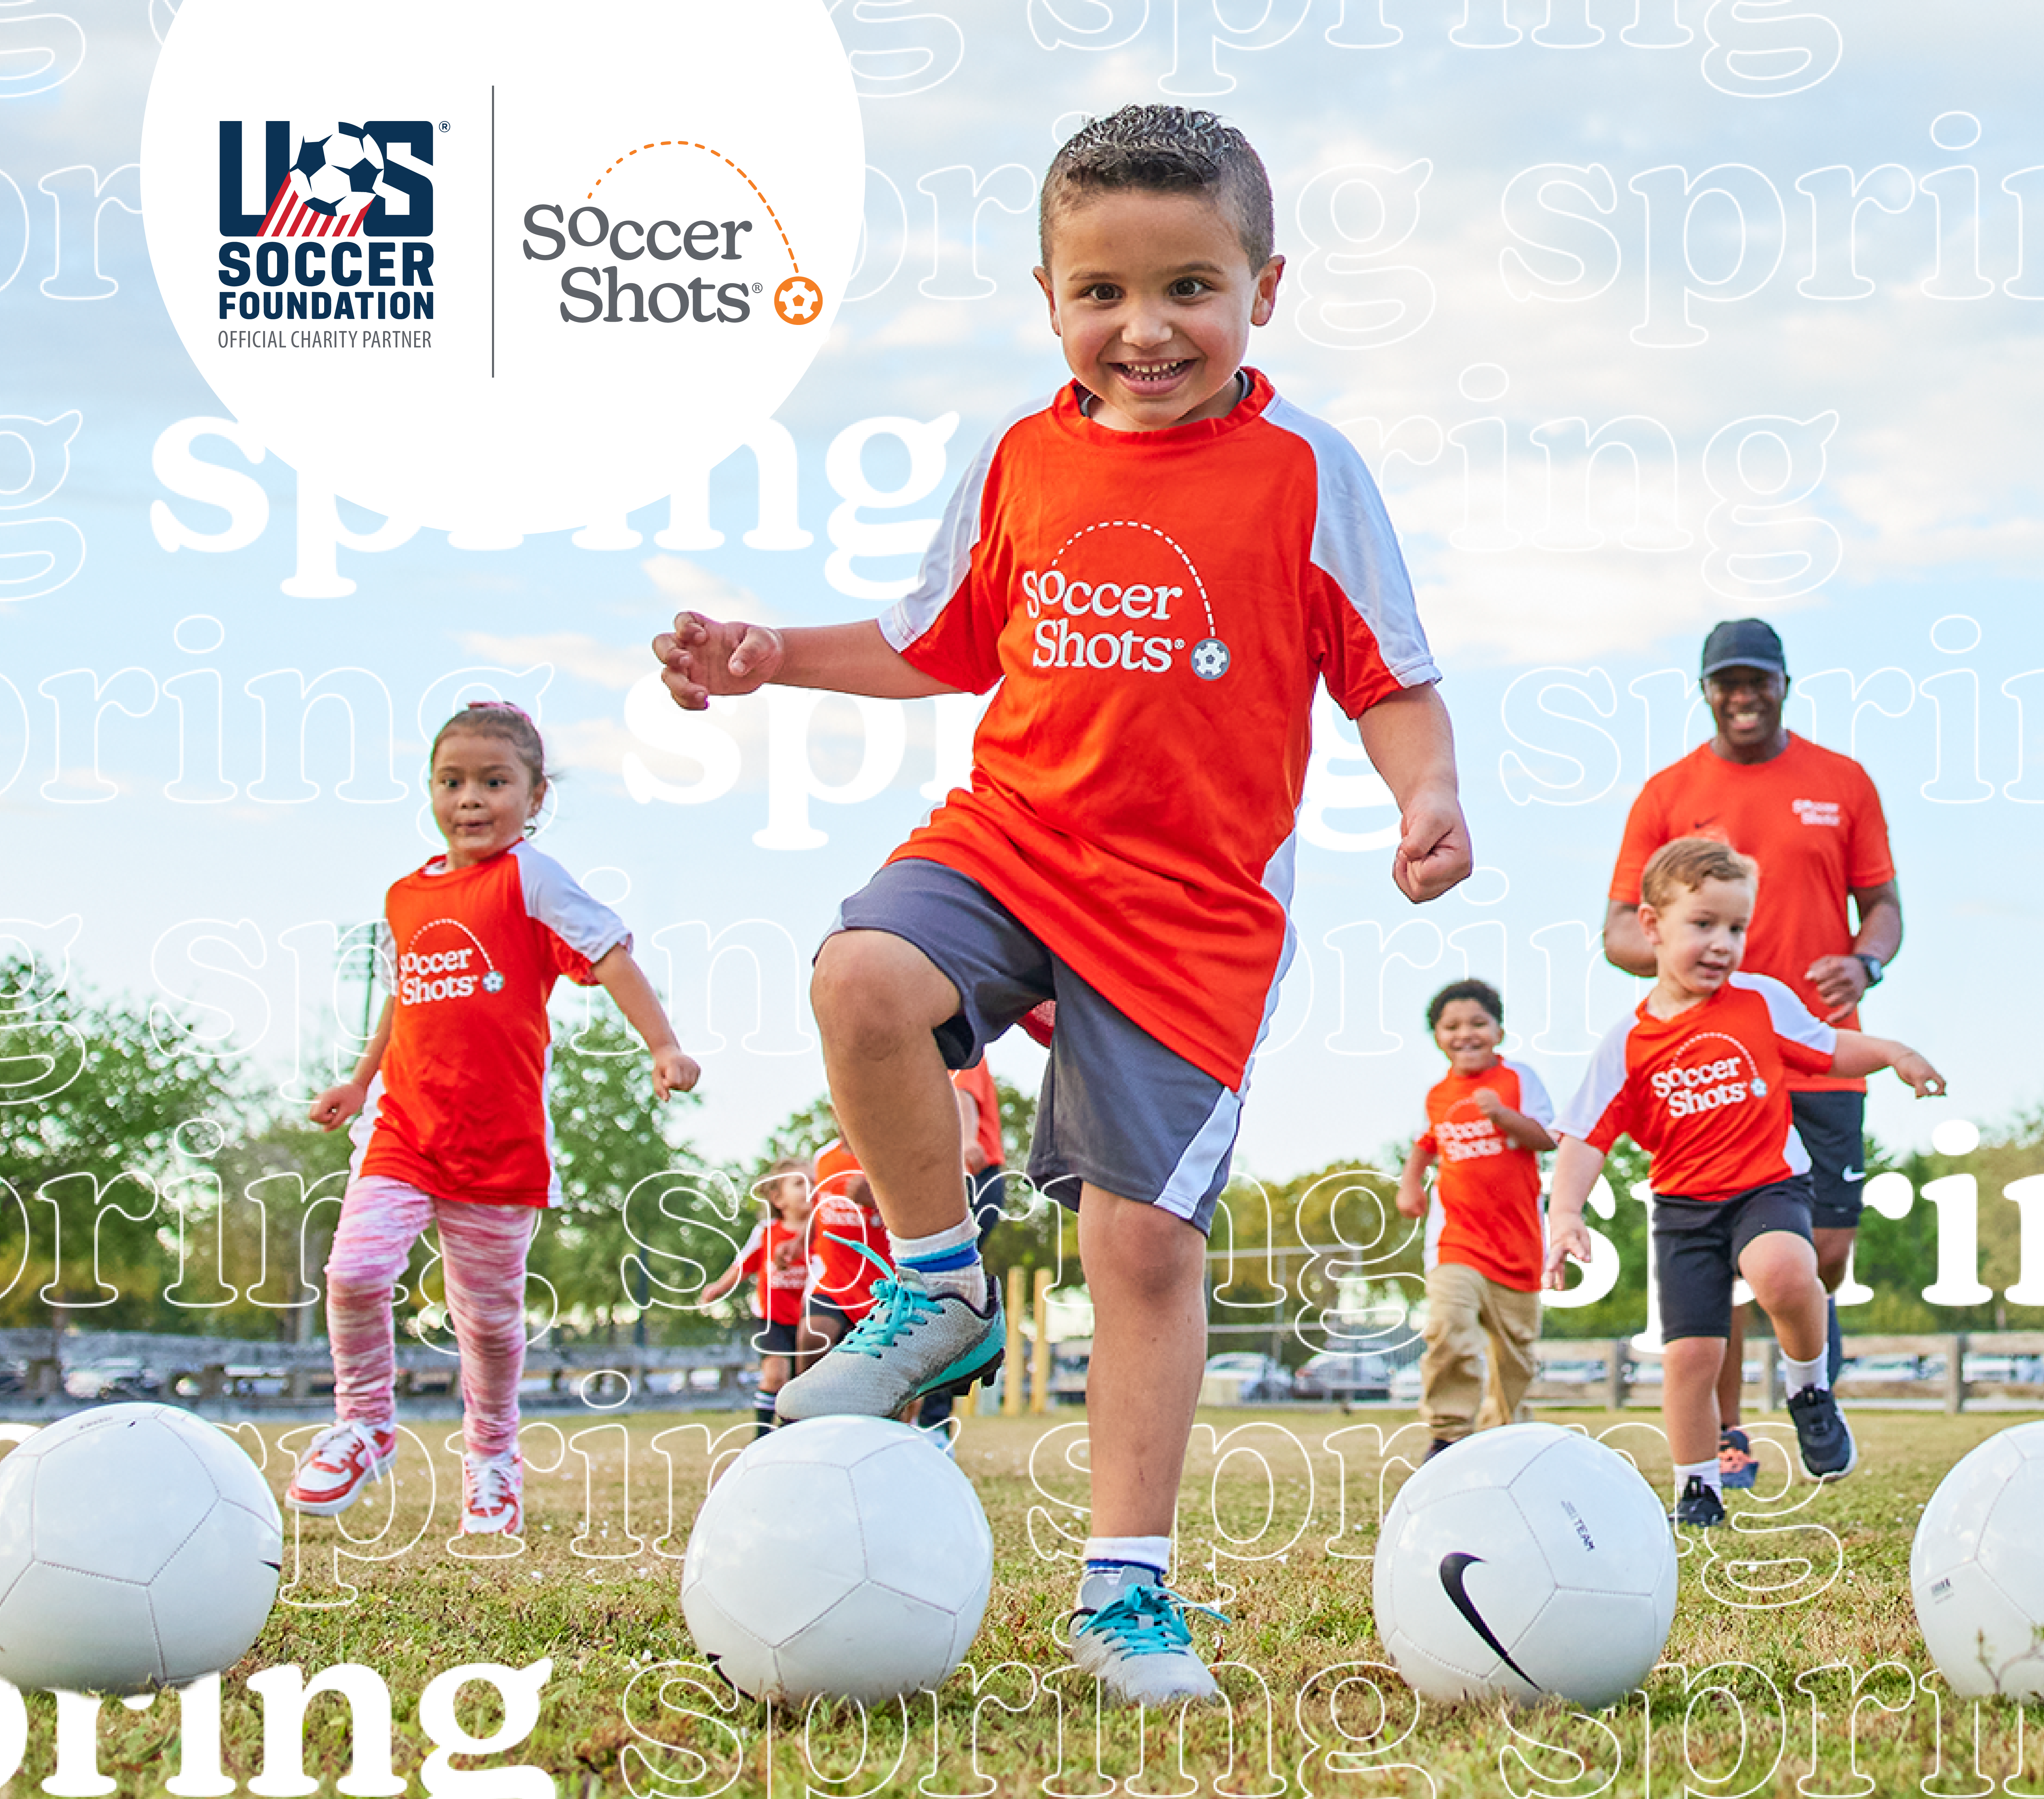 Group of children in Soccer Shots jerseys running towards a row of soccer balls.